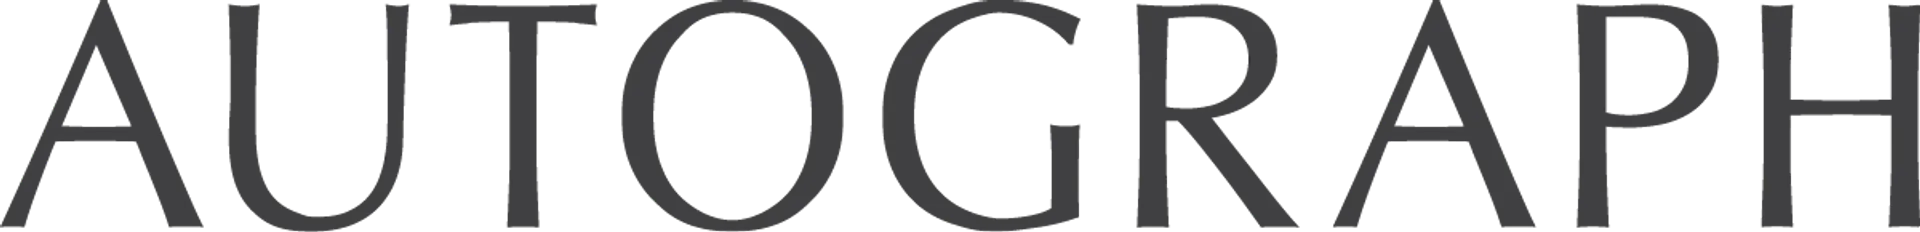 AUTOGRAPH logo of current flyer